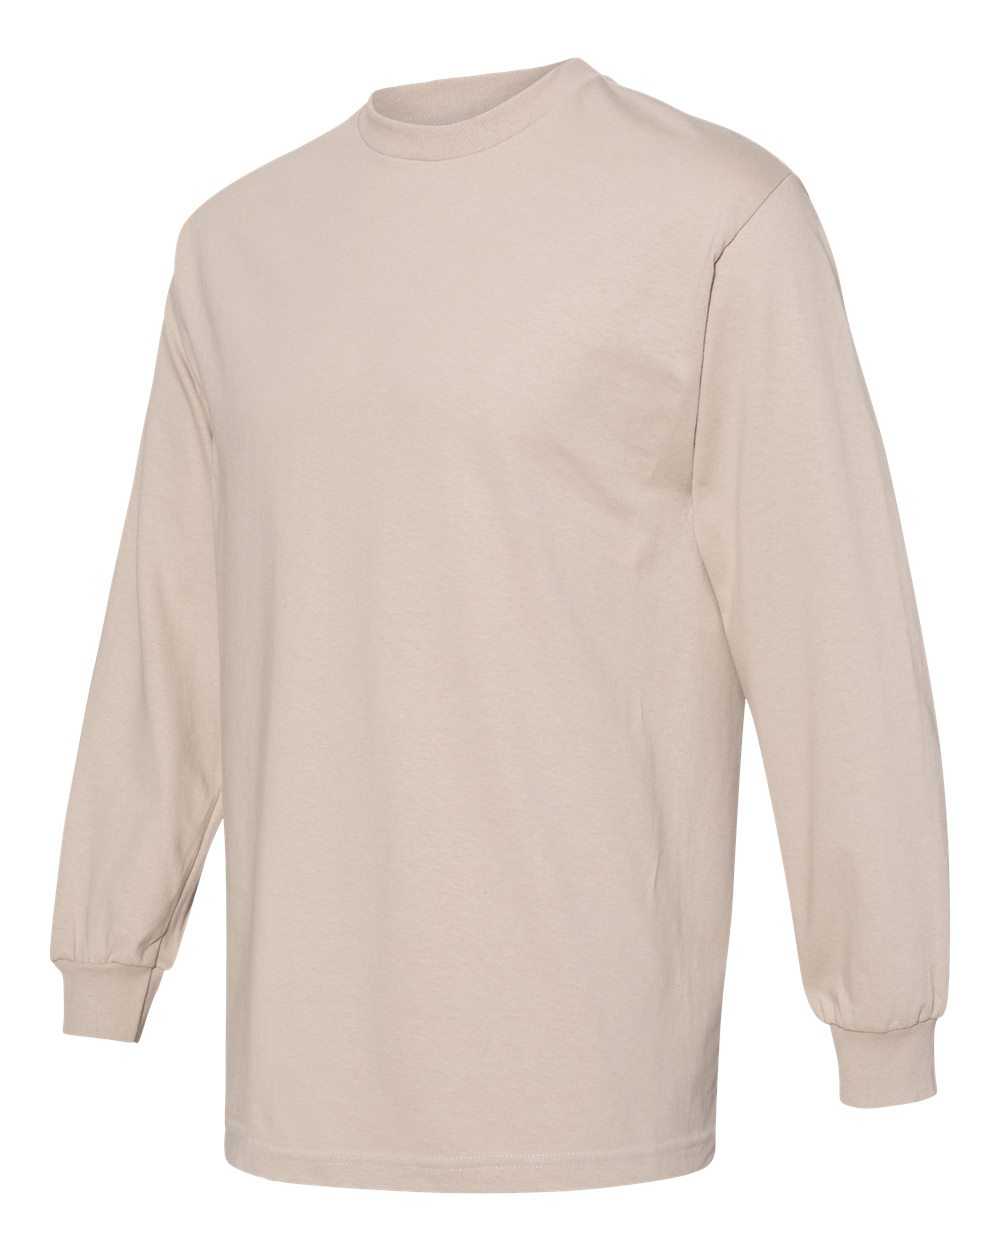 American Apparel 1304 Unisex Heavyweight Cotton Long Sleeve T-Shirt - Sand - HIT a Double